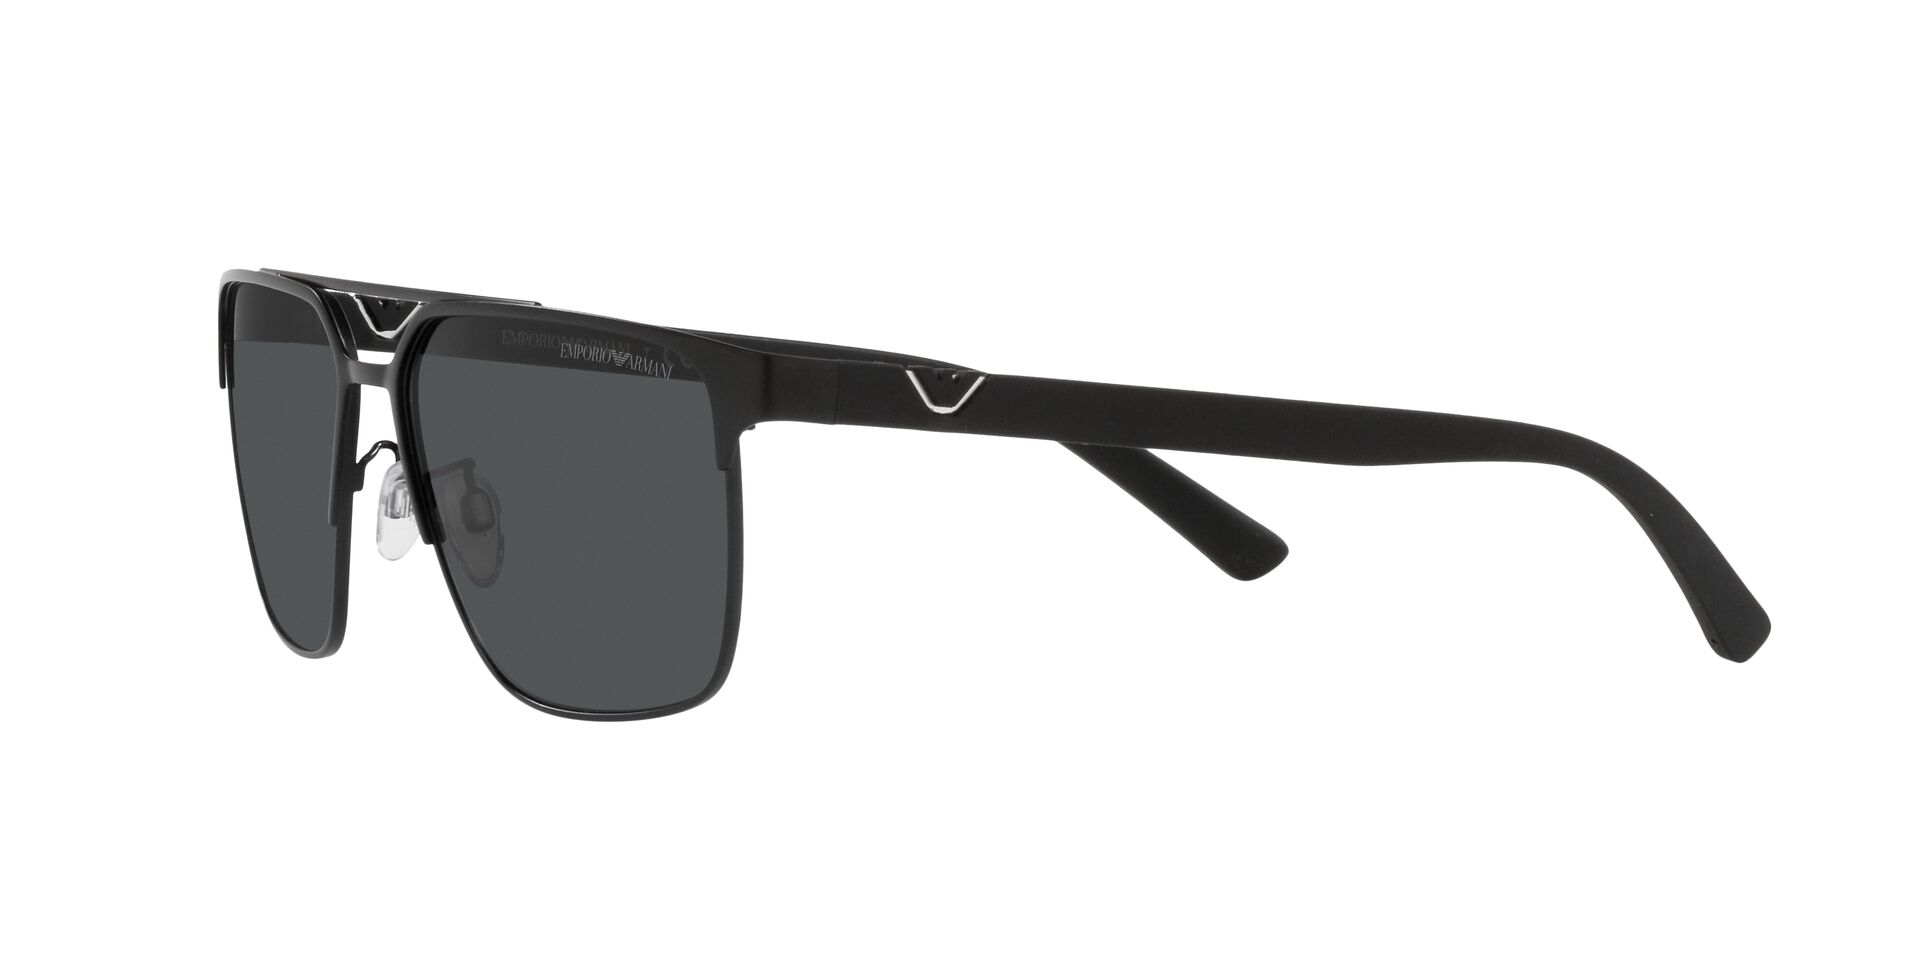 Sunglasses Emporio Armani Black in Plastic - 31607793-mncb.edu.vn